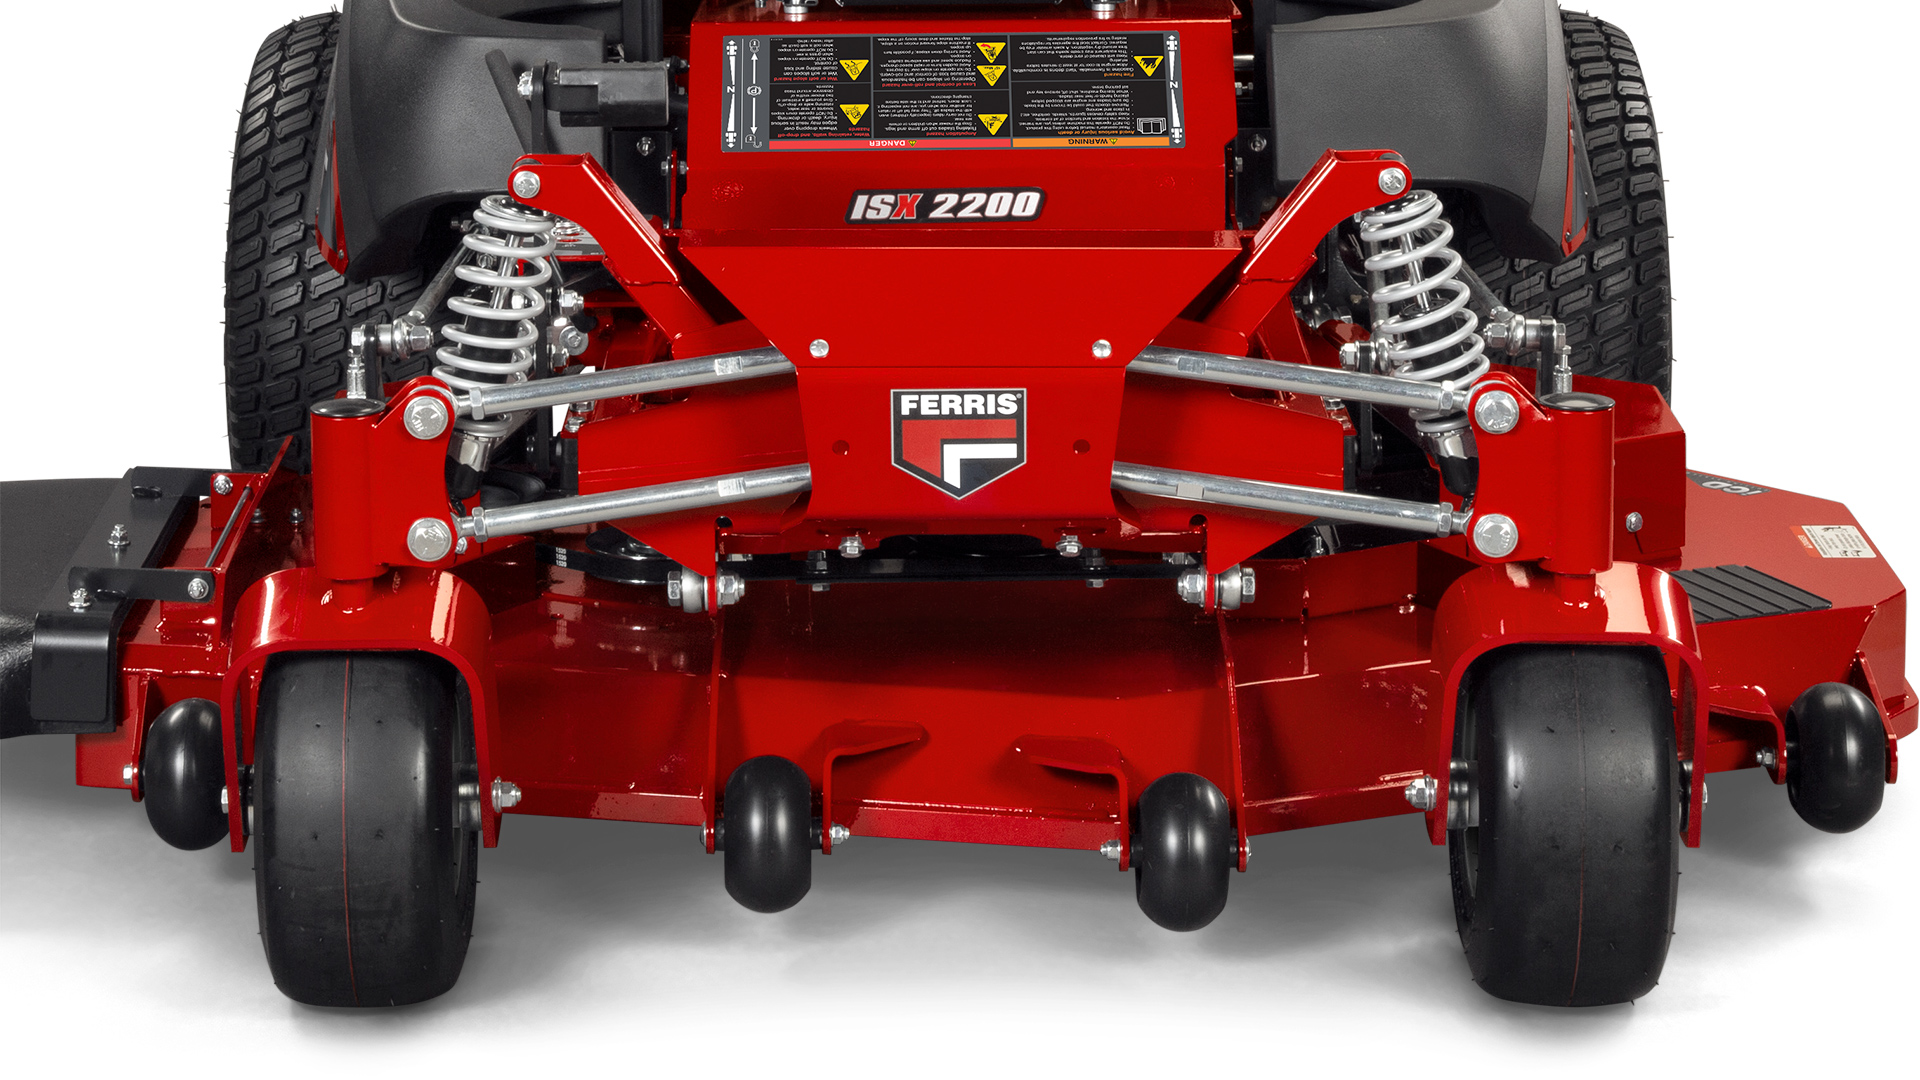 Ferris ISX™ 2200 Zero Turn Mower - Forefront™ Suspension System